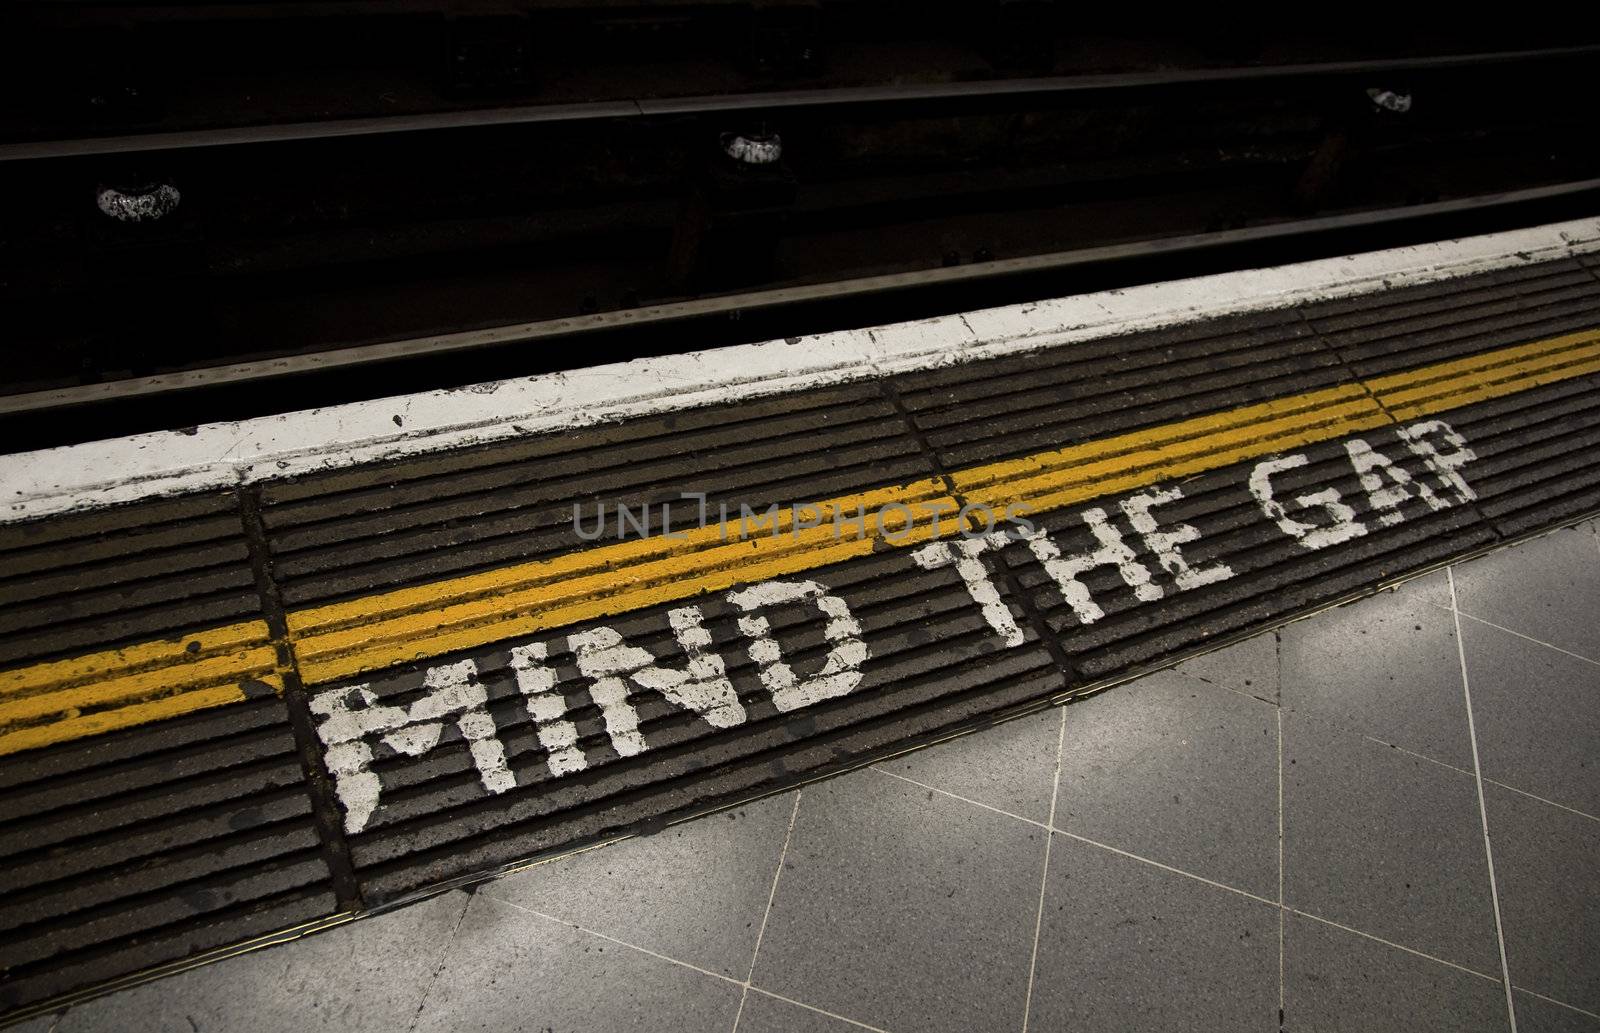 Mind the gap, warning in the London underground